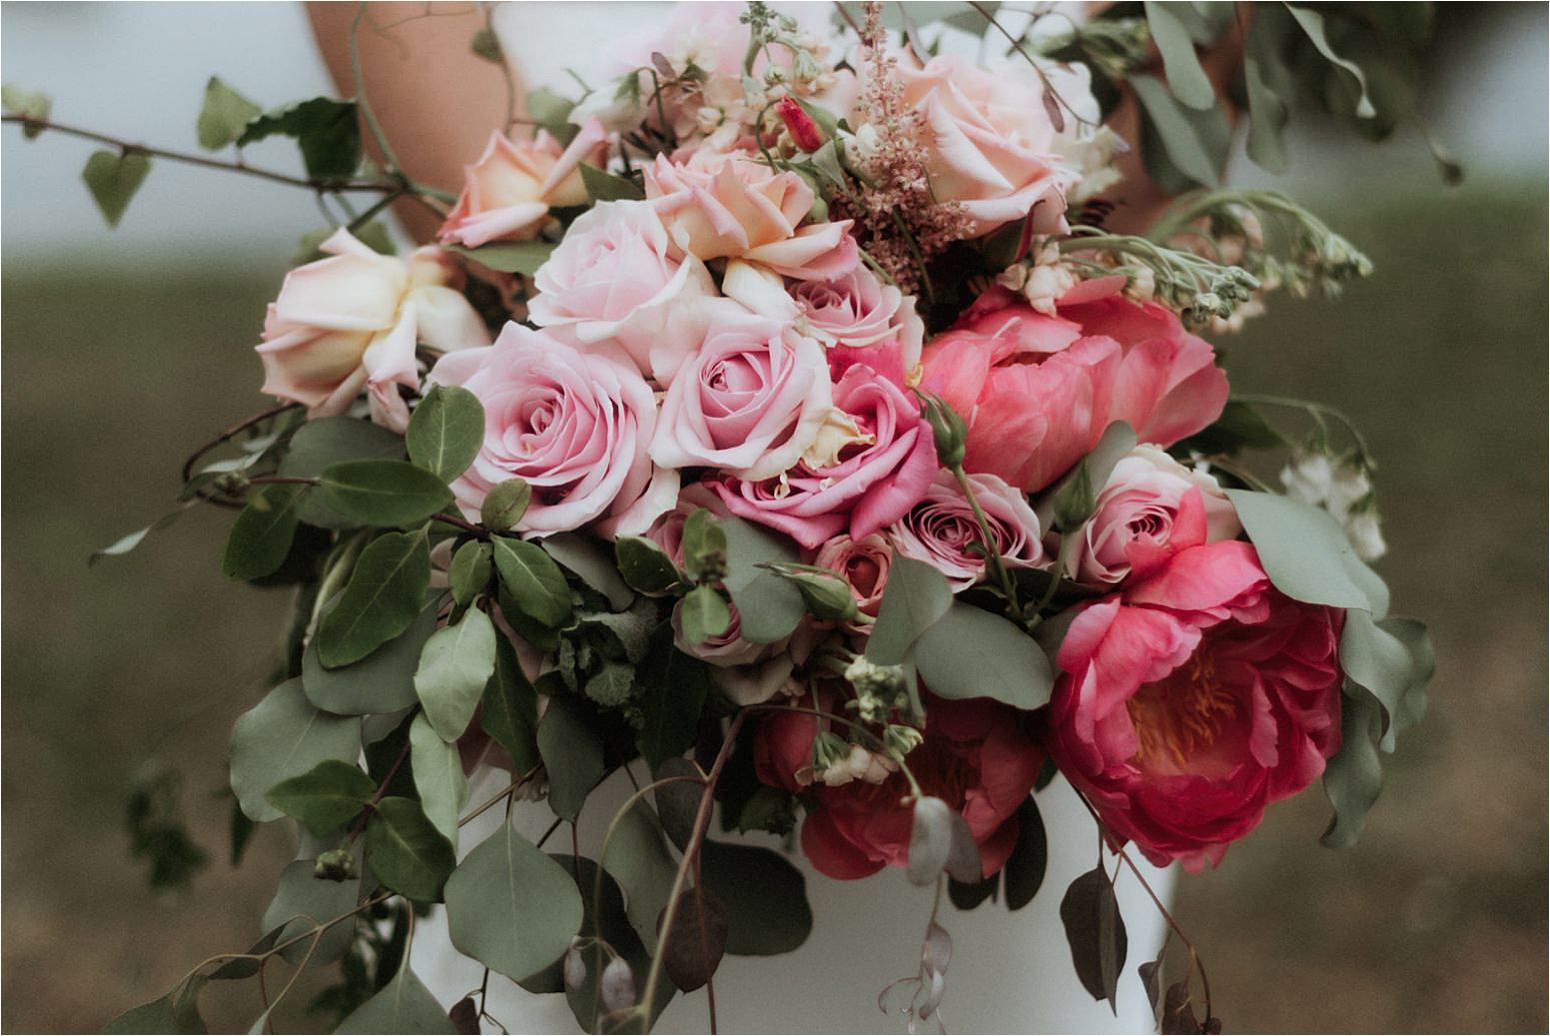 scottish bride with flowers